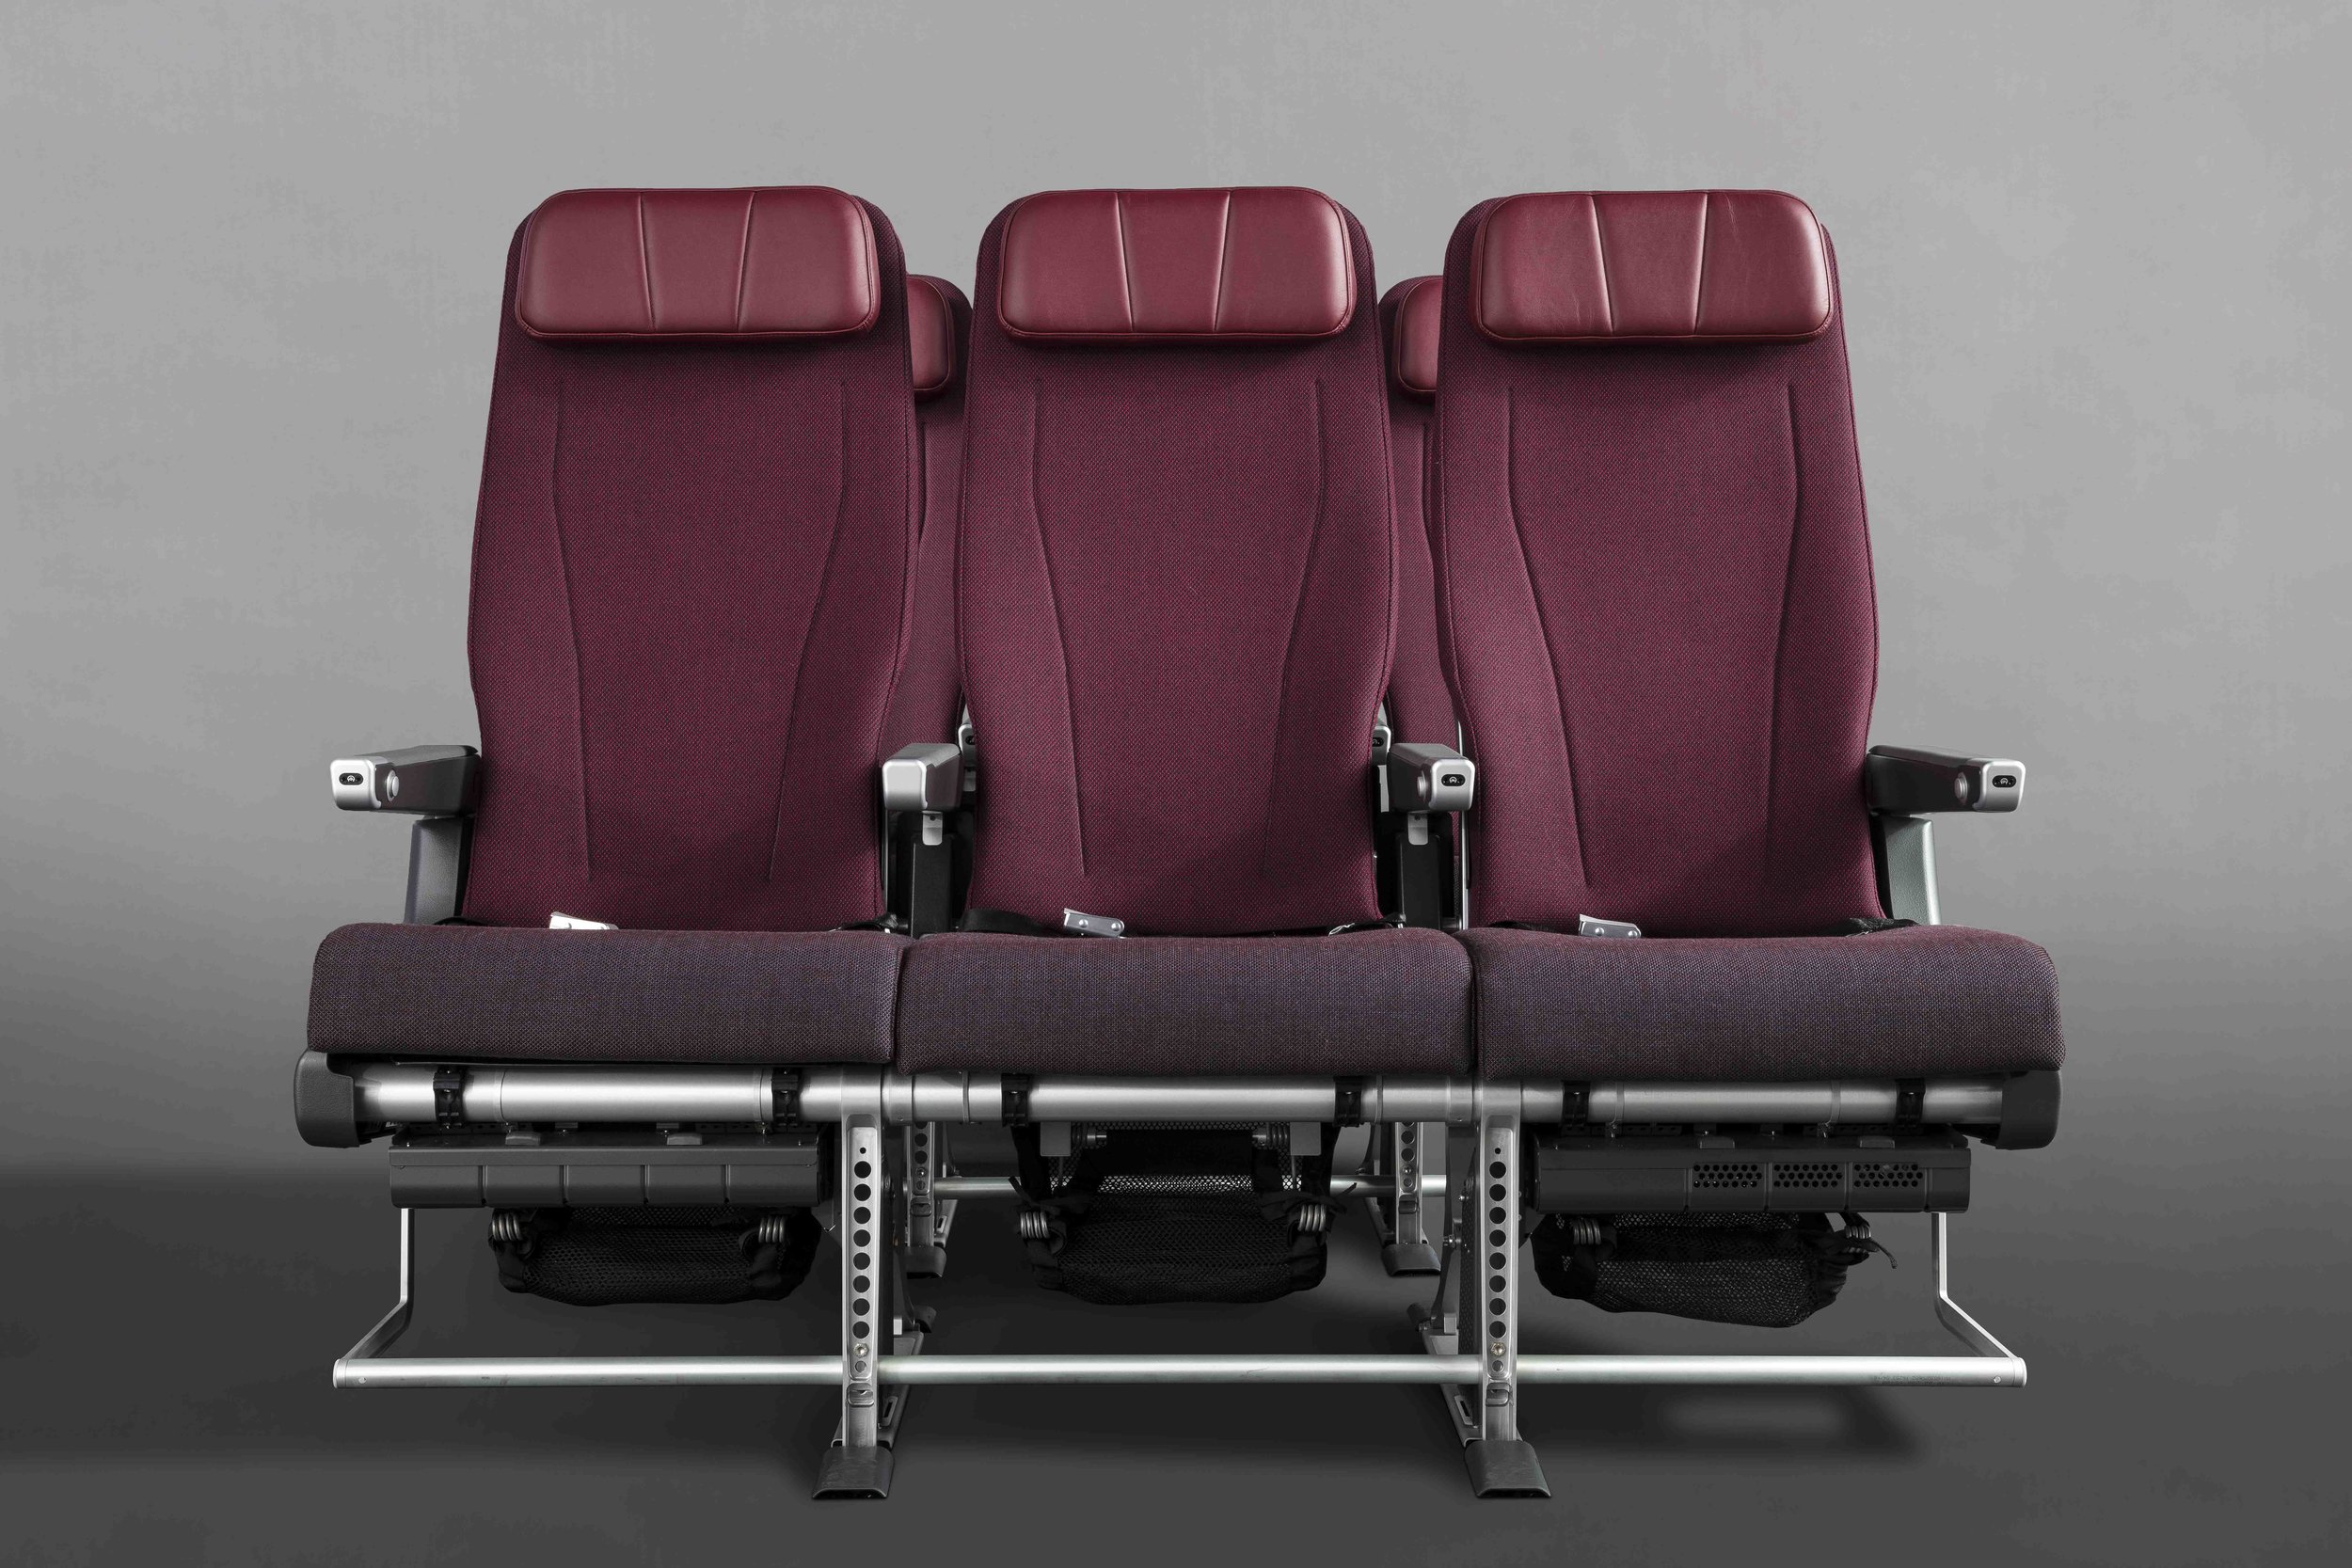 Qantas 787 Dreamliner Premium Economy Seats by Caon Studio